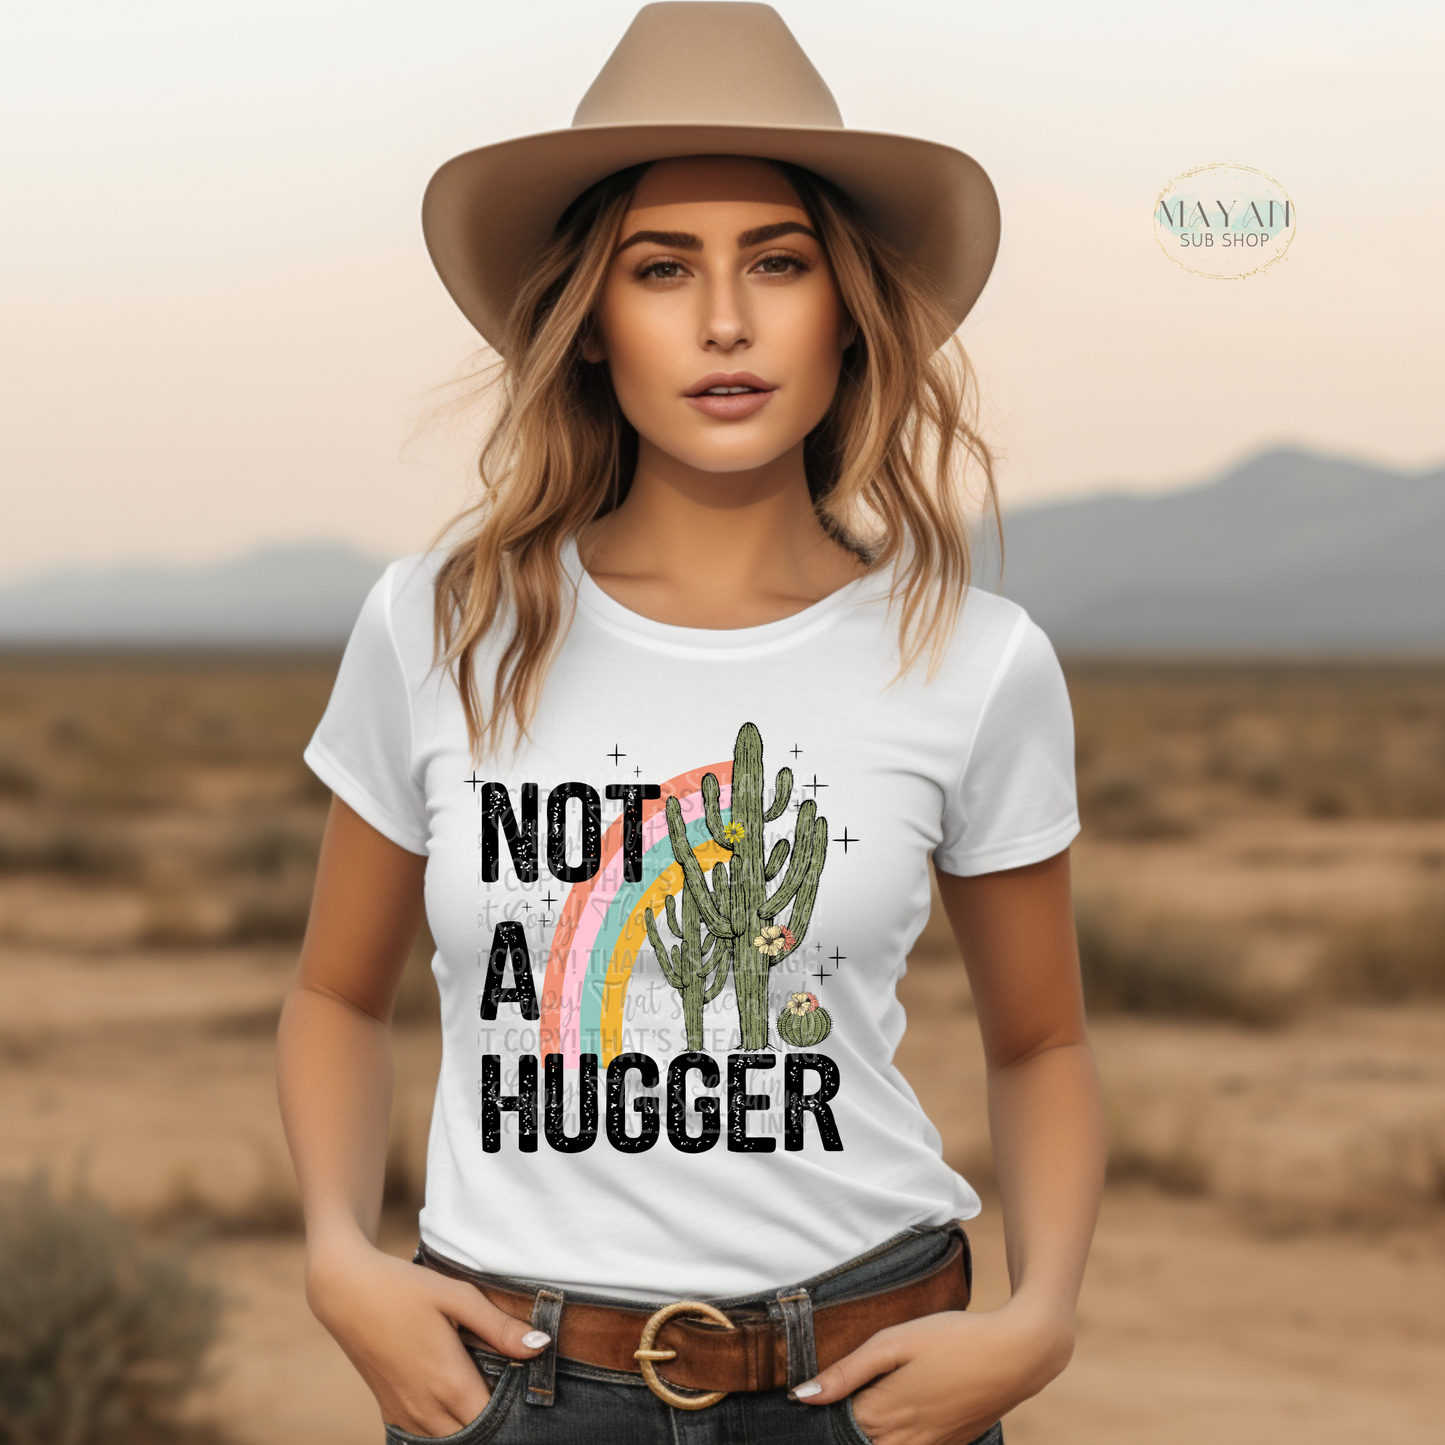 Not a hugger shirt. -Mayan Sub Shop